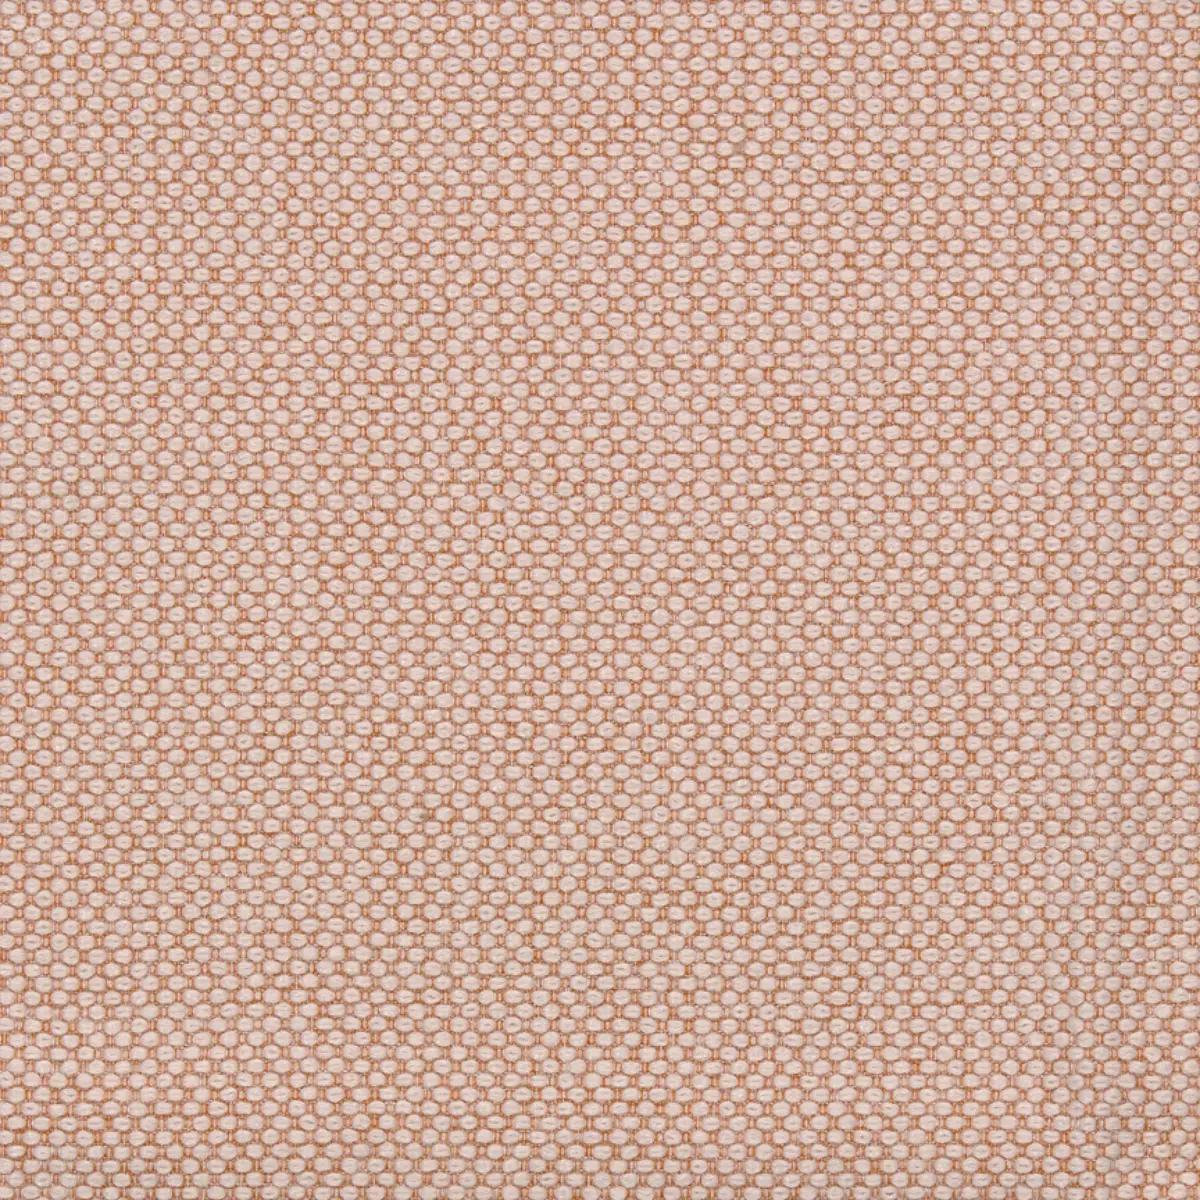 Fabric sample Merit 0036 pink